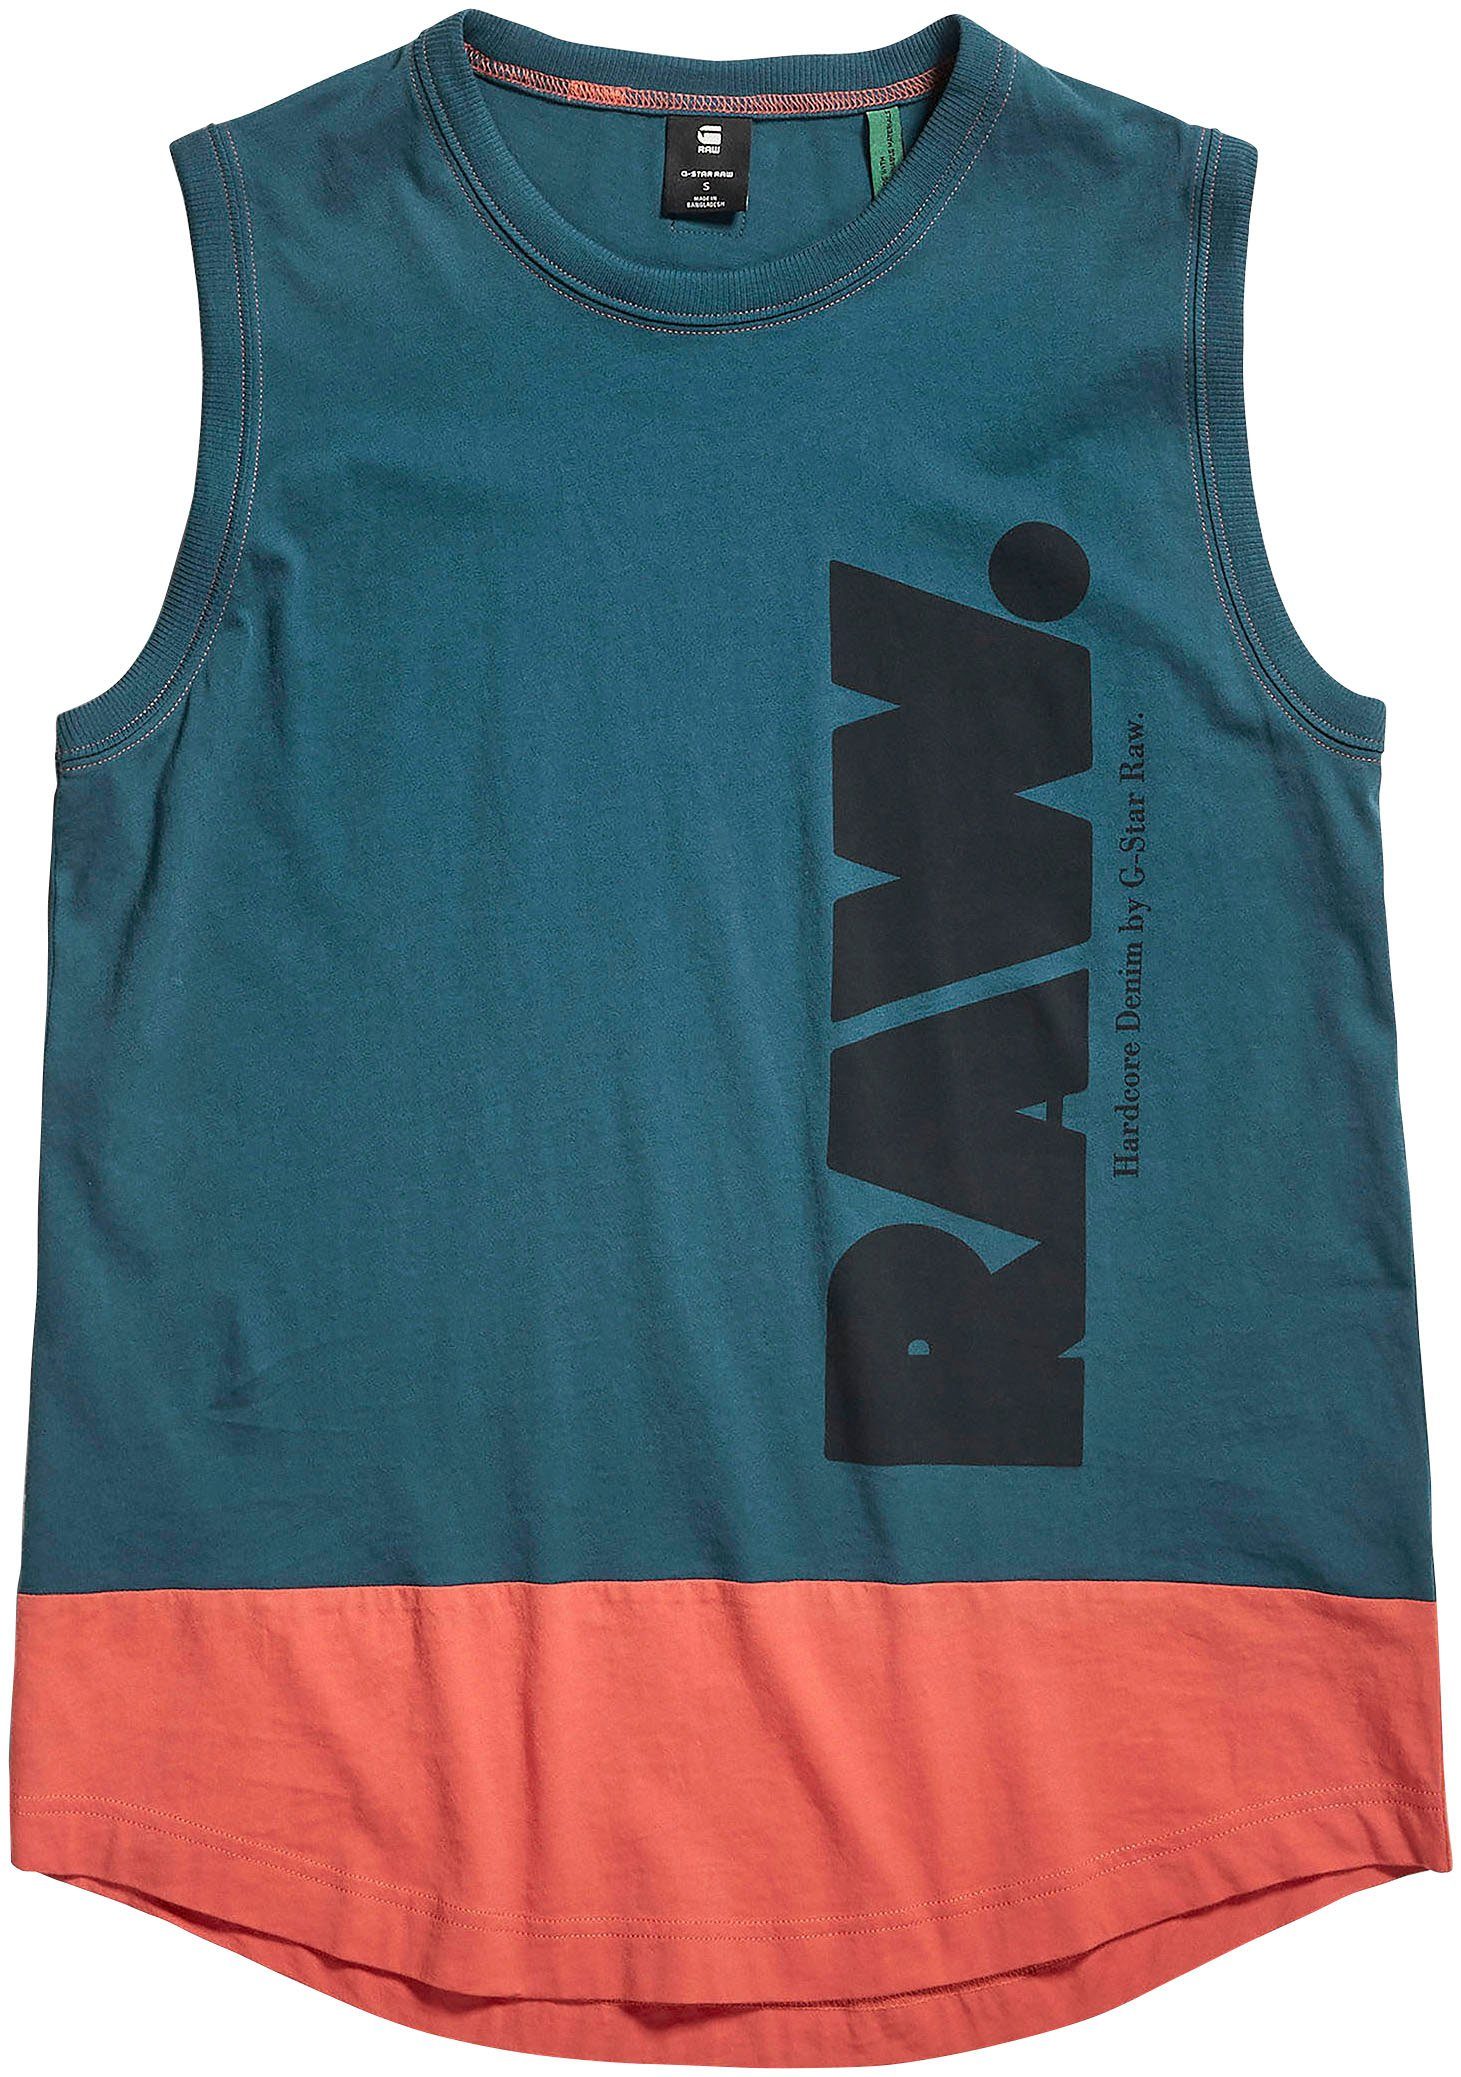 G-Star RAW T-Shirt to rotorange) (petrol/ block vorne tank nitro/paprika Lash block Grafikdruck T-Shirt color Logo color mti